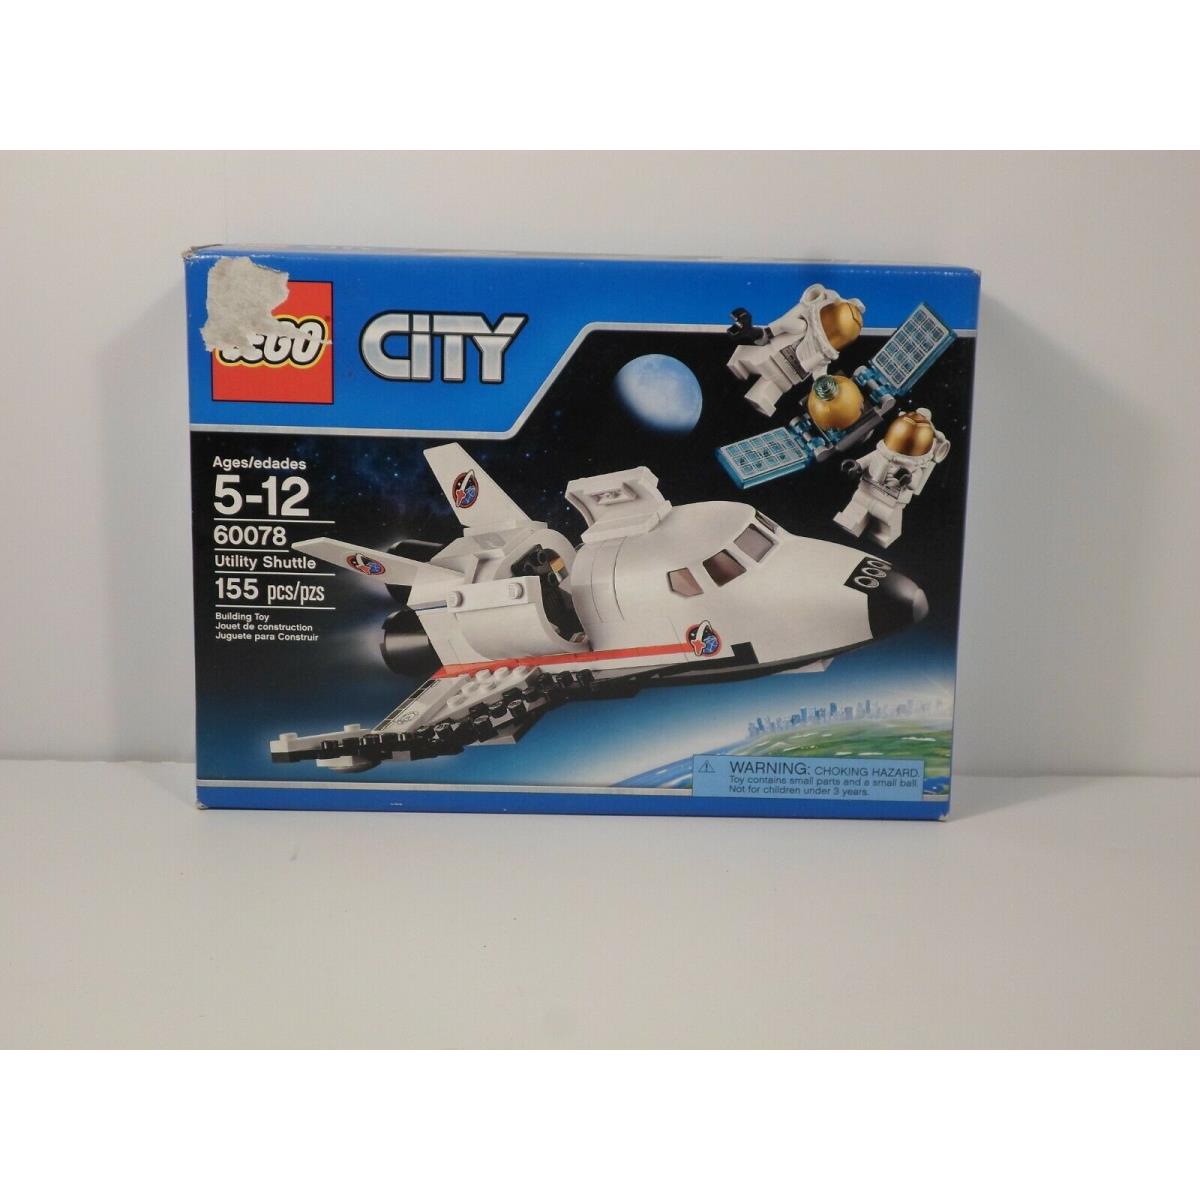 Lego City 60078 Utility Shuttle Space Shuttle 2 Astronauts